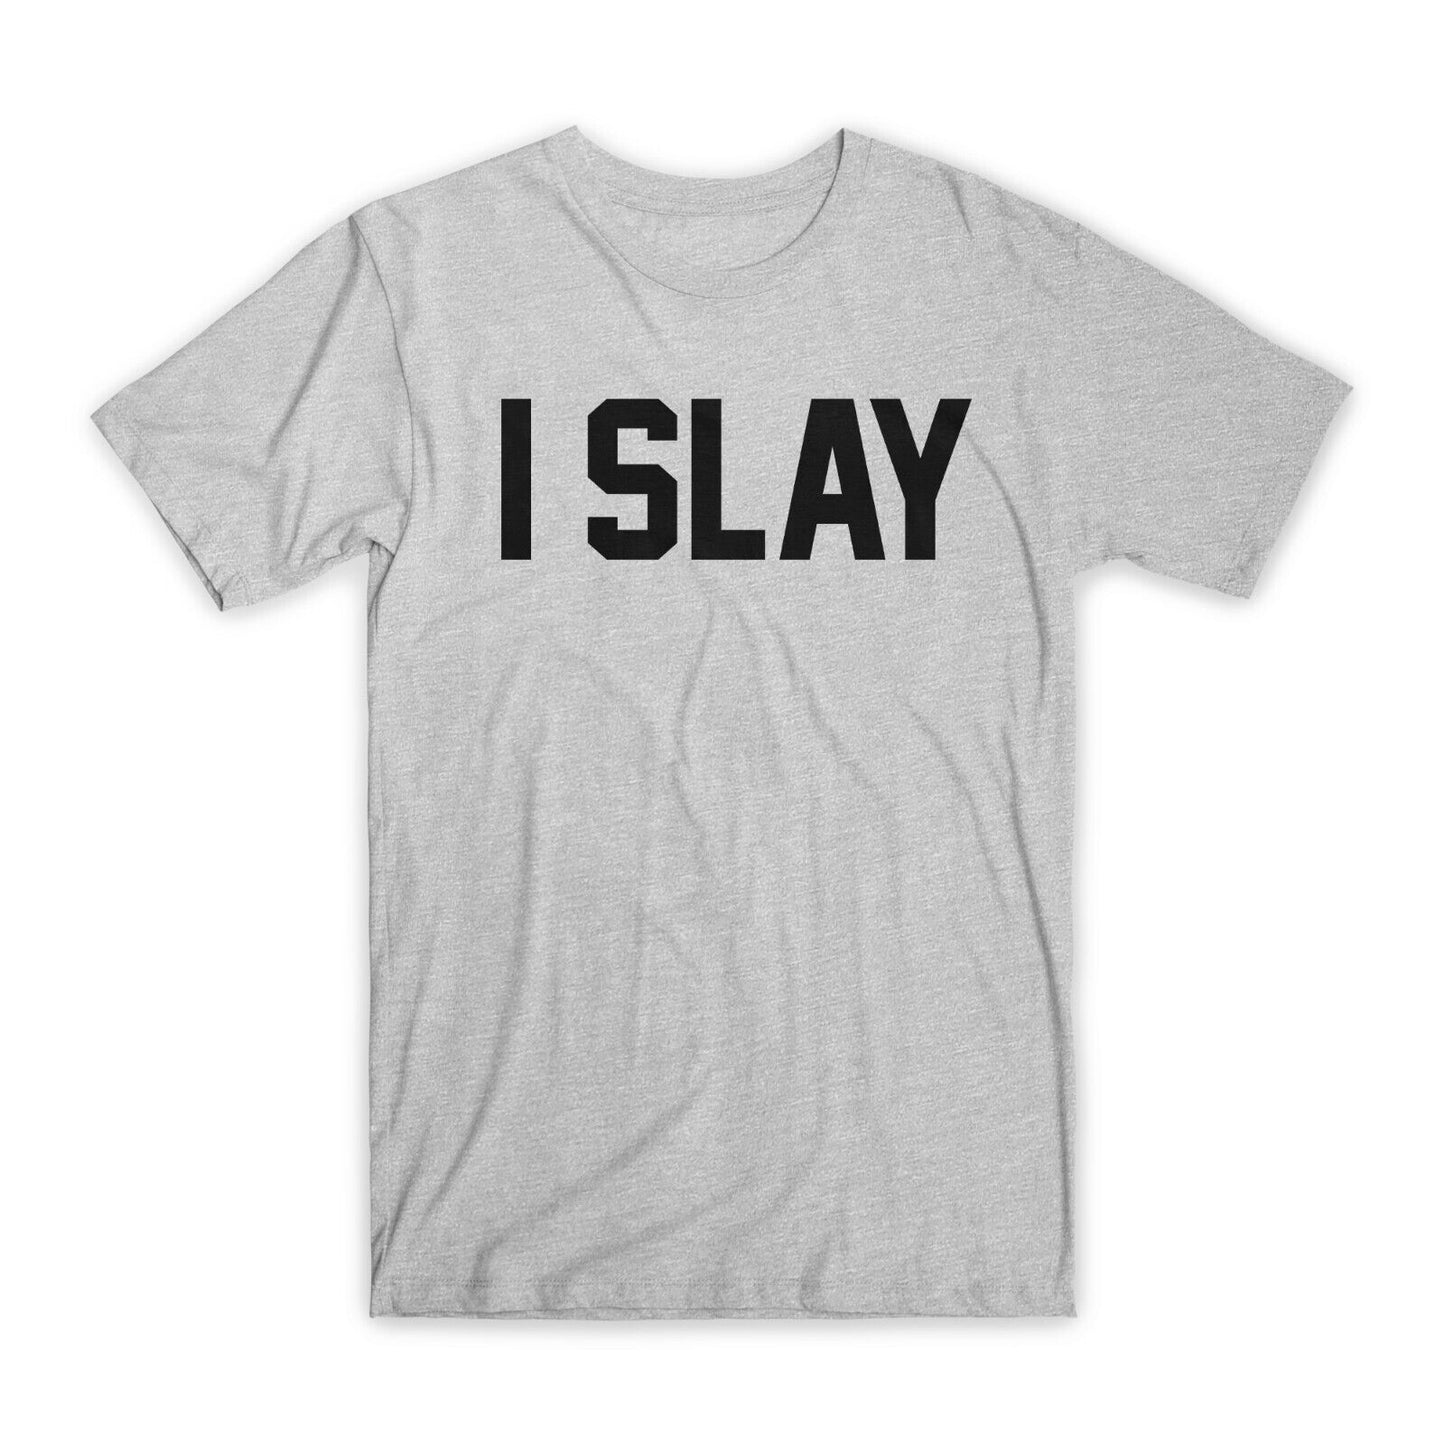 I Slay Printed T-Shirt Premium Soft Cotton Crew Neck Funny Tees Novelty Gift NEW